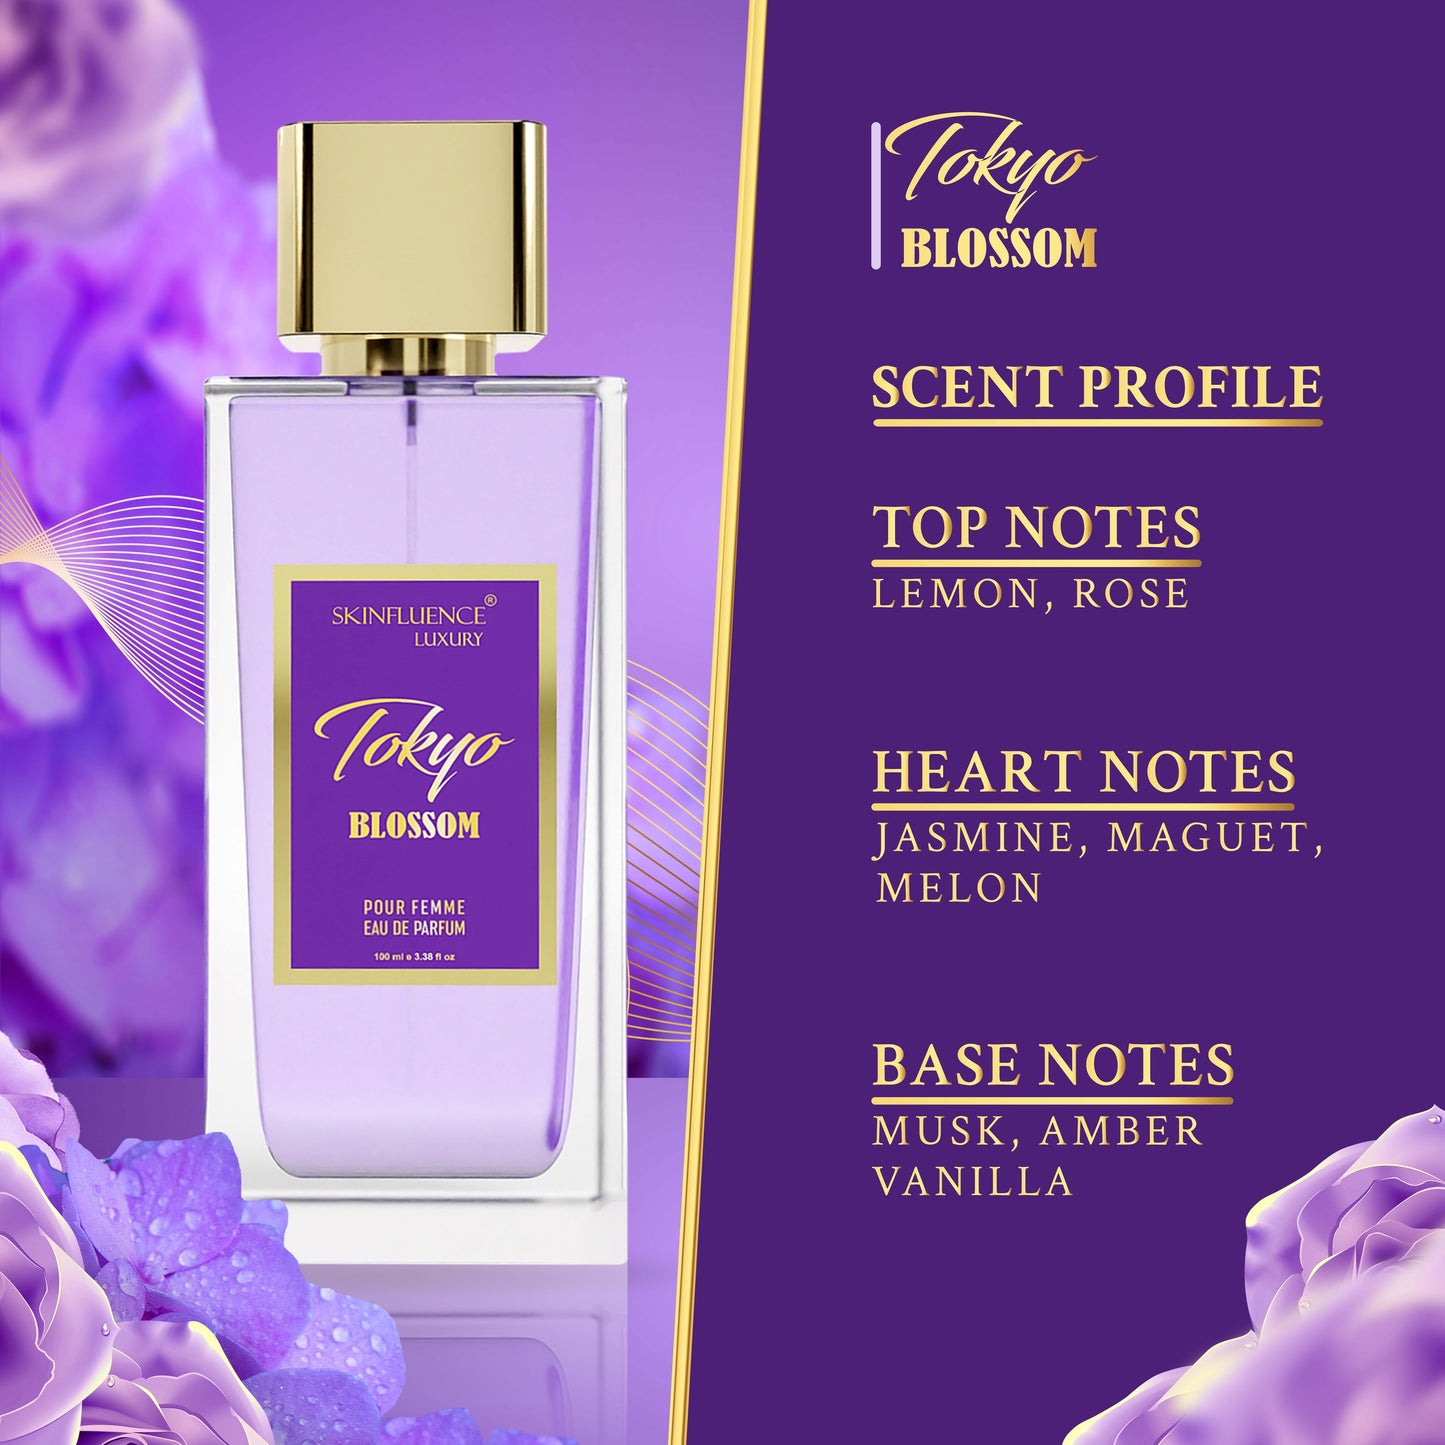 SKINFLUENCE Luxury Tokyo Blossom Floral Perfume For Women 100Ml- Eau De Parfum